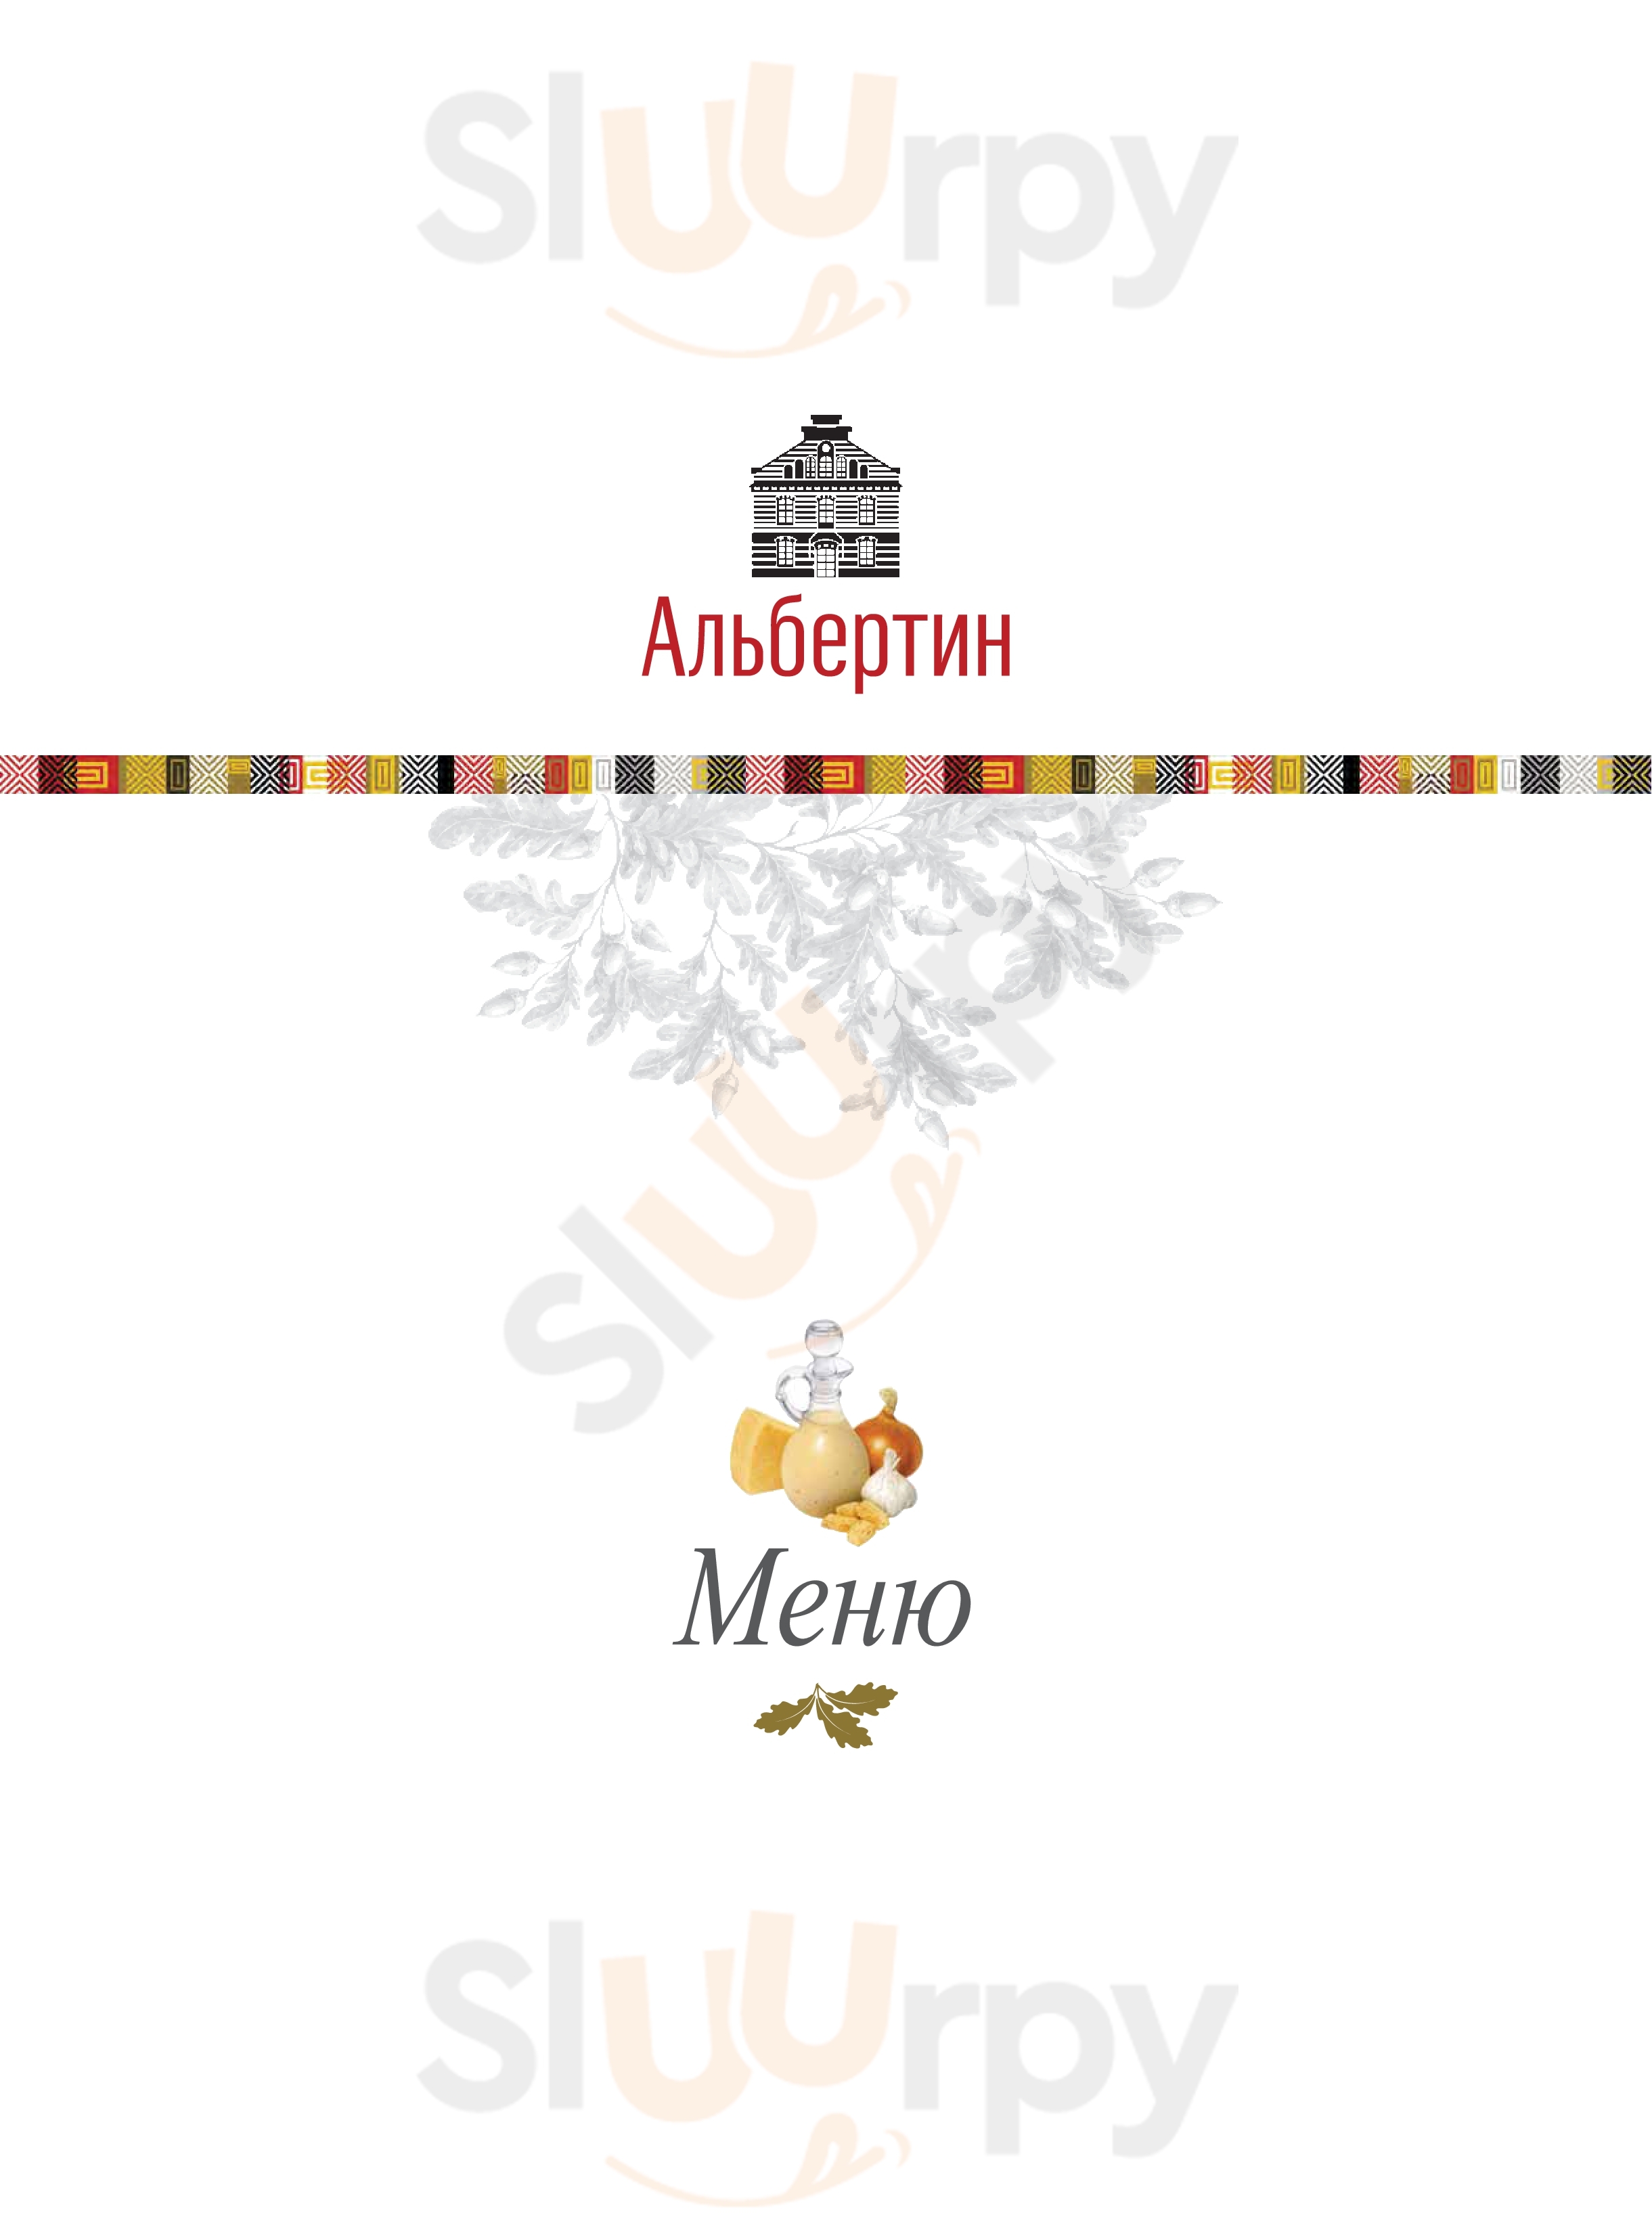 Albertin  Restaurant Lviv Menu - 1